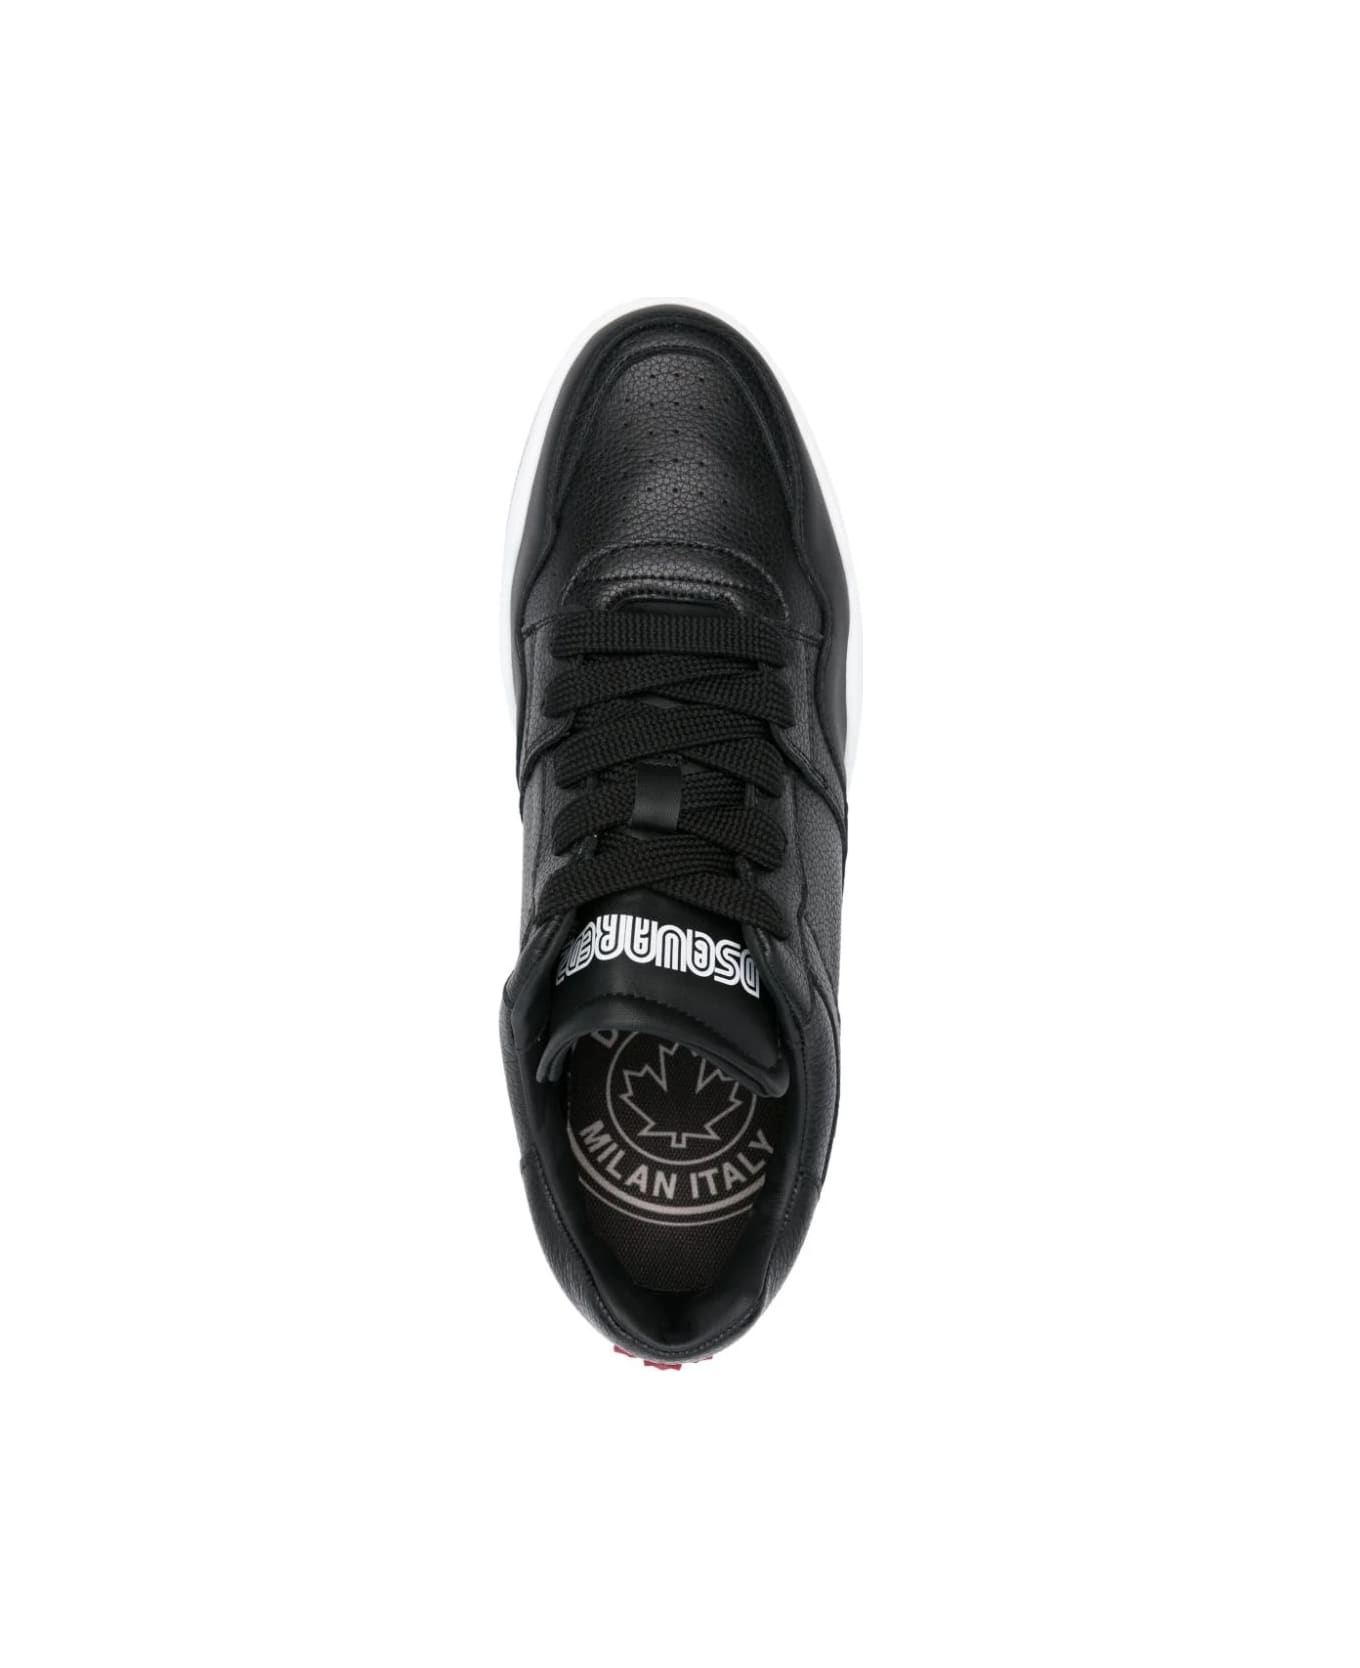 Dsquared2 Black Spiker Sneakers - Black スニーカー